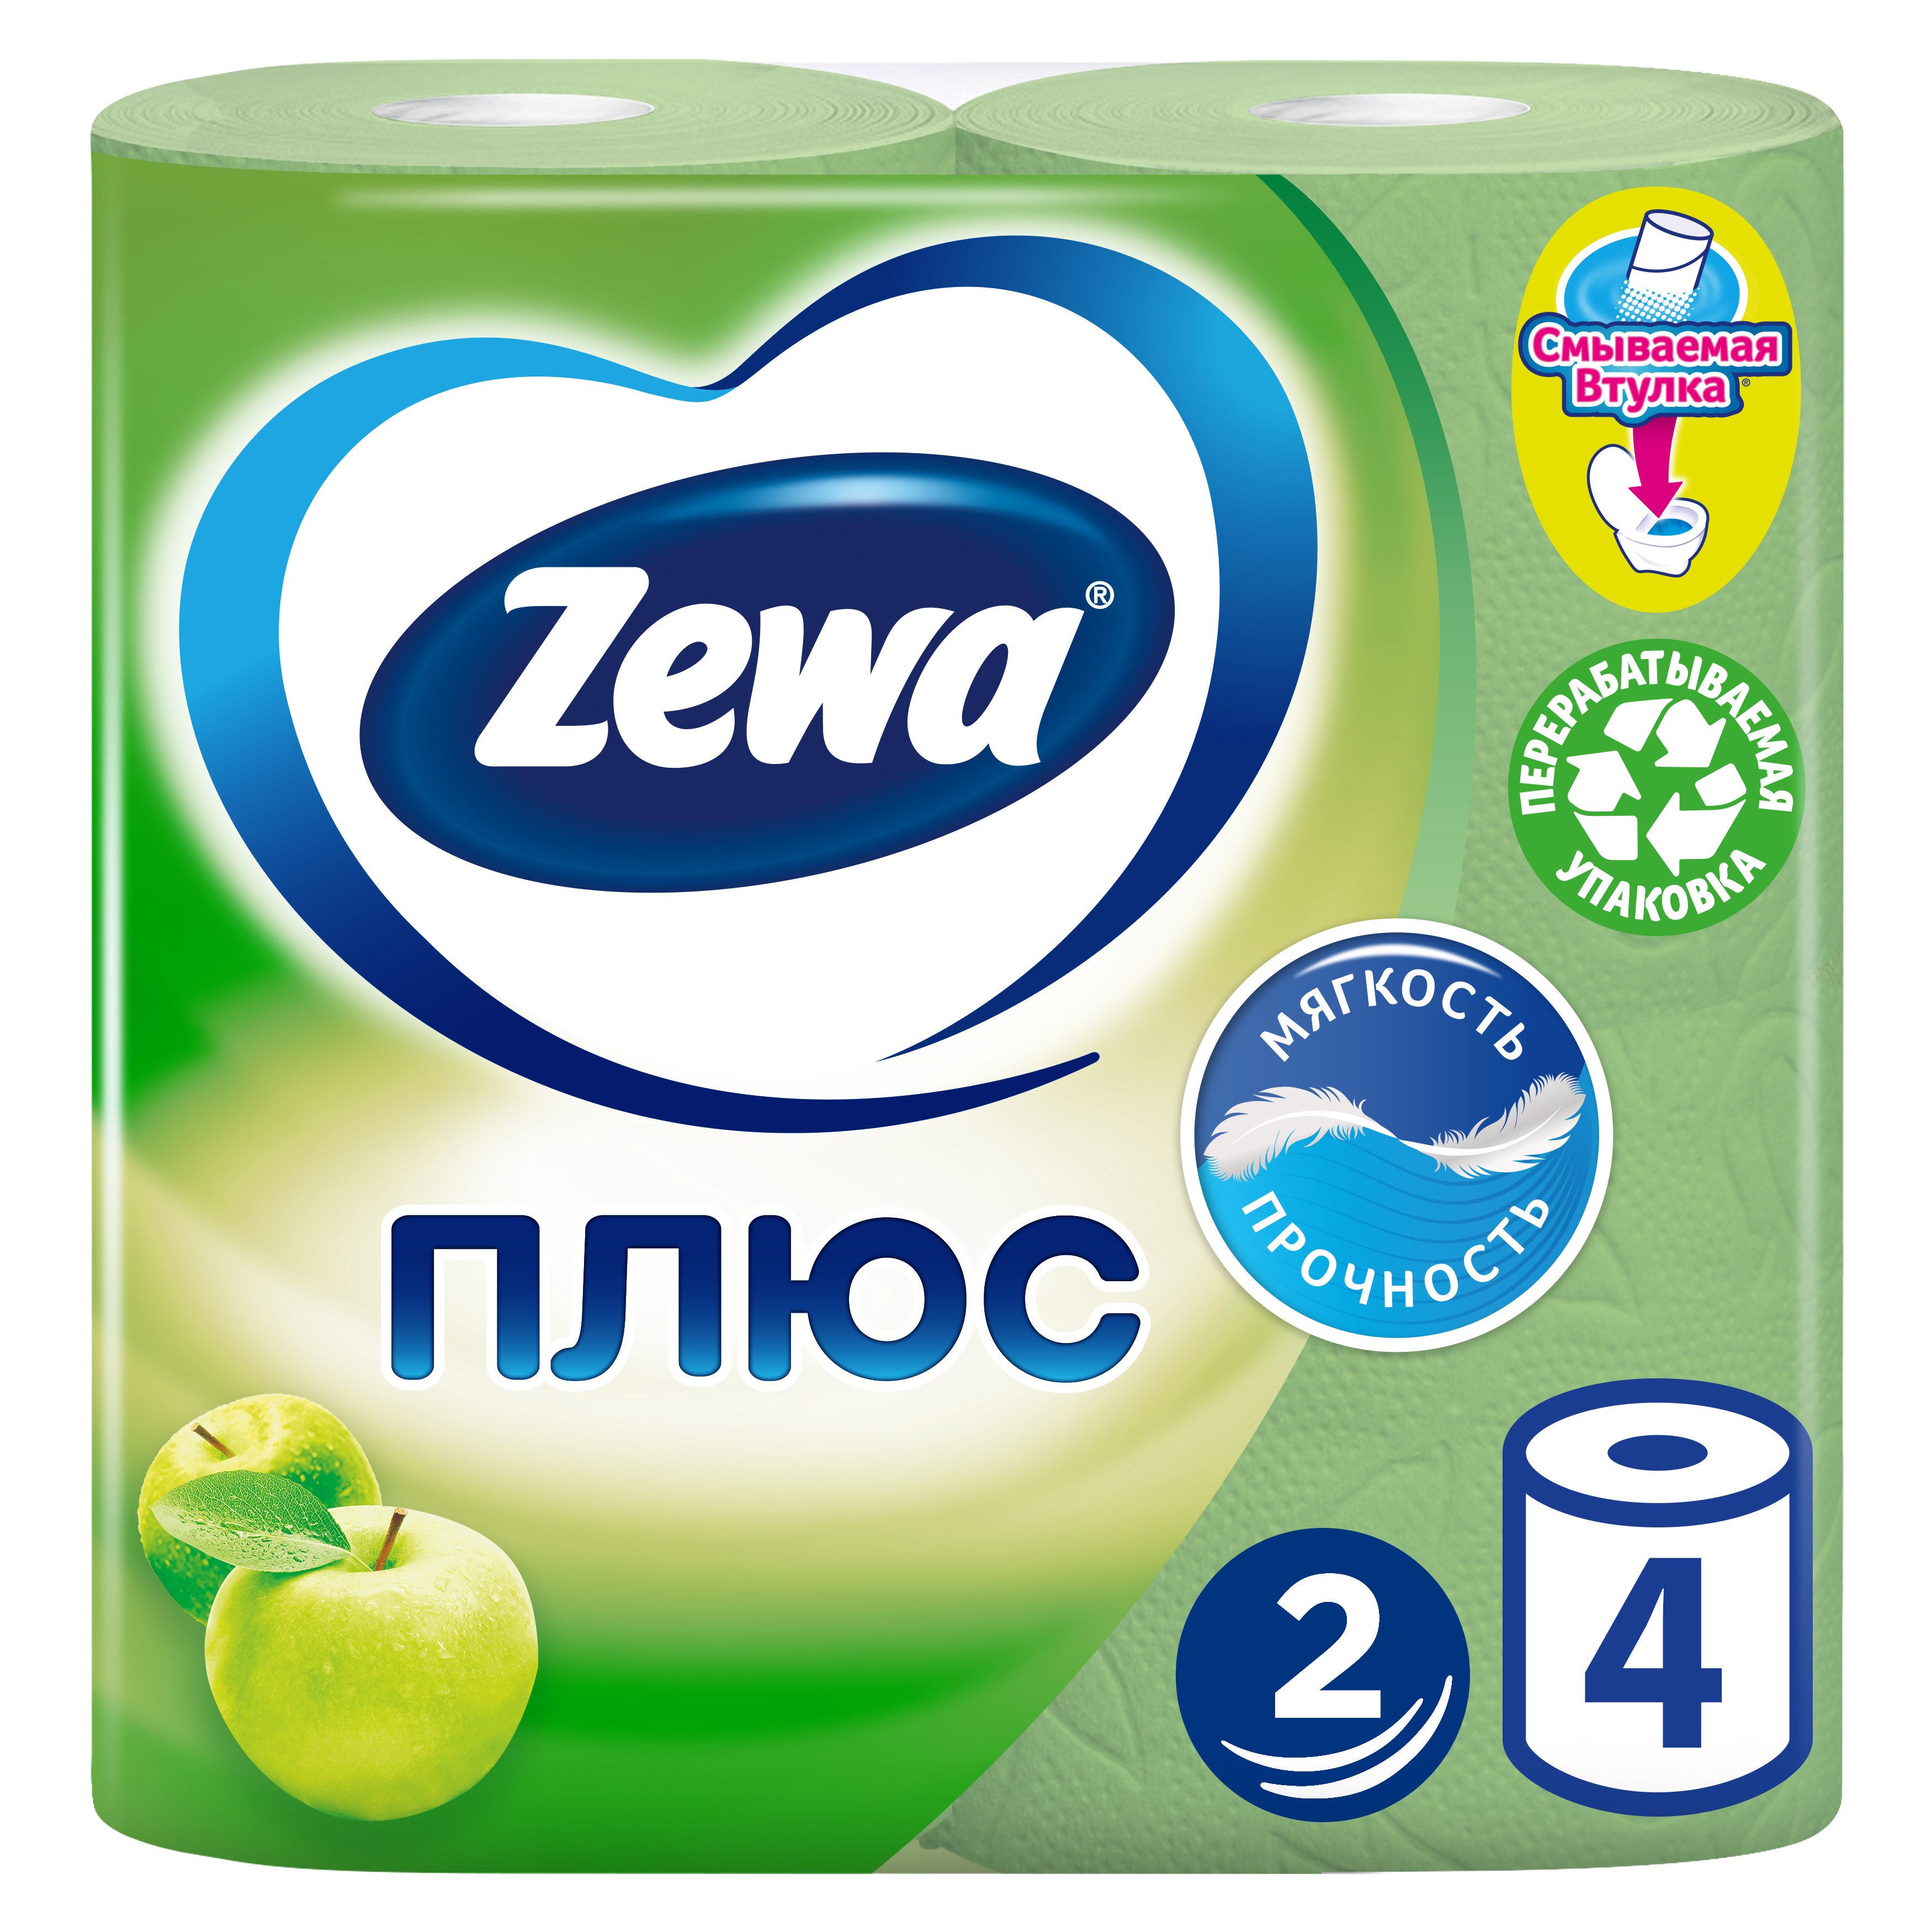 Двухслойная туалетная бумага Zewa Plus яблоко, зеленая, 4 рулона - фото 1